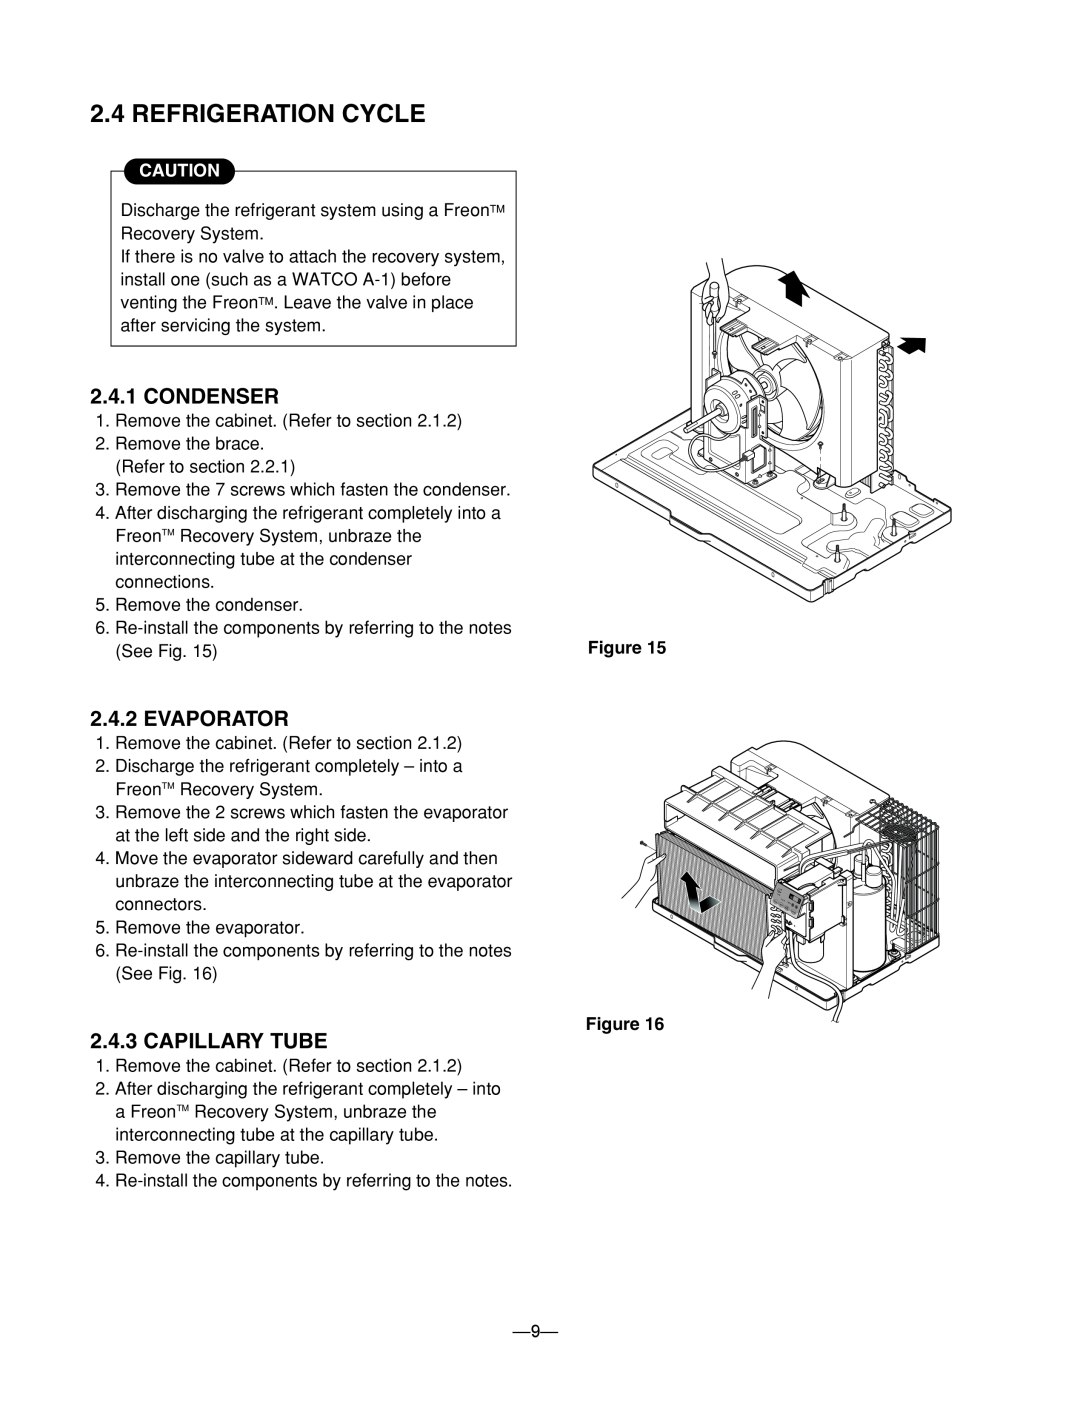 Heat Controller BG-81A, BG-123A, BG-101A service manual Refrigeration Cycle, Condenser, Evaporator, Capillary Tube 